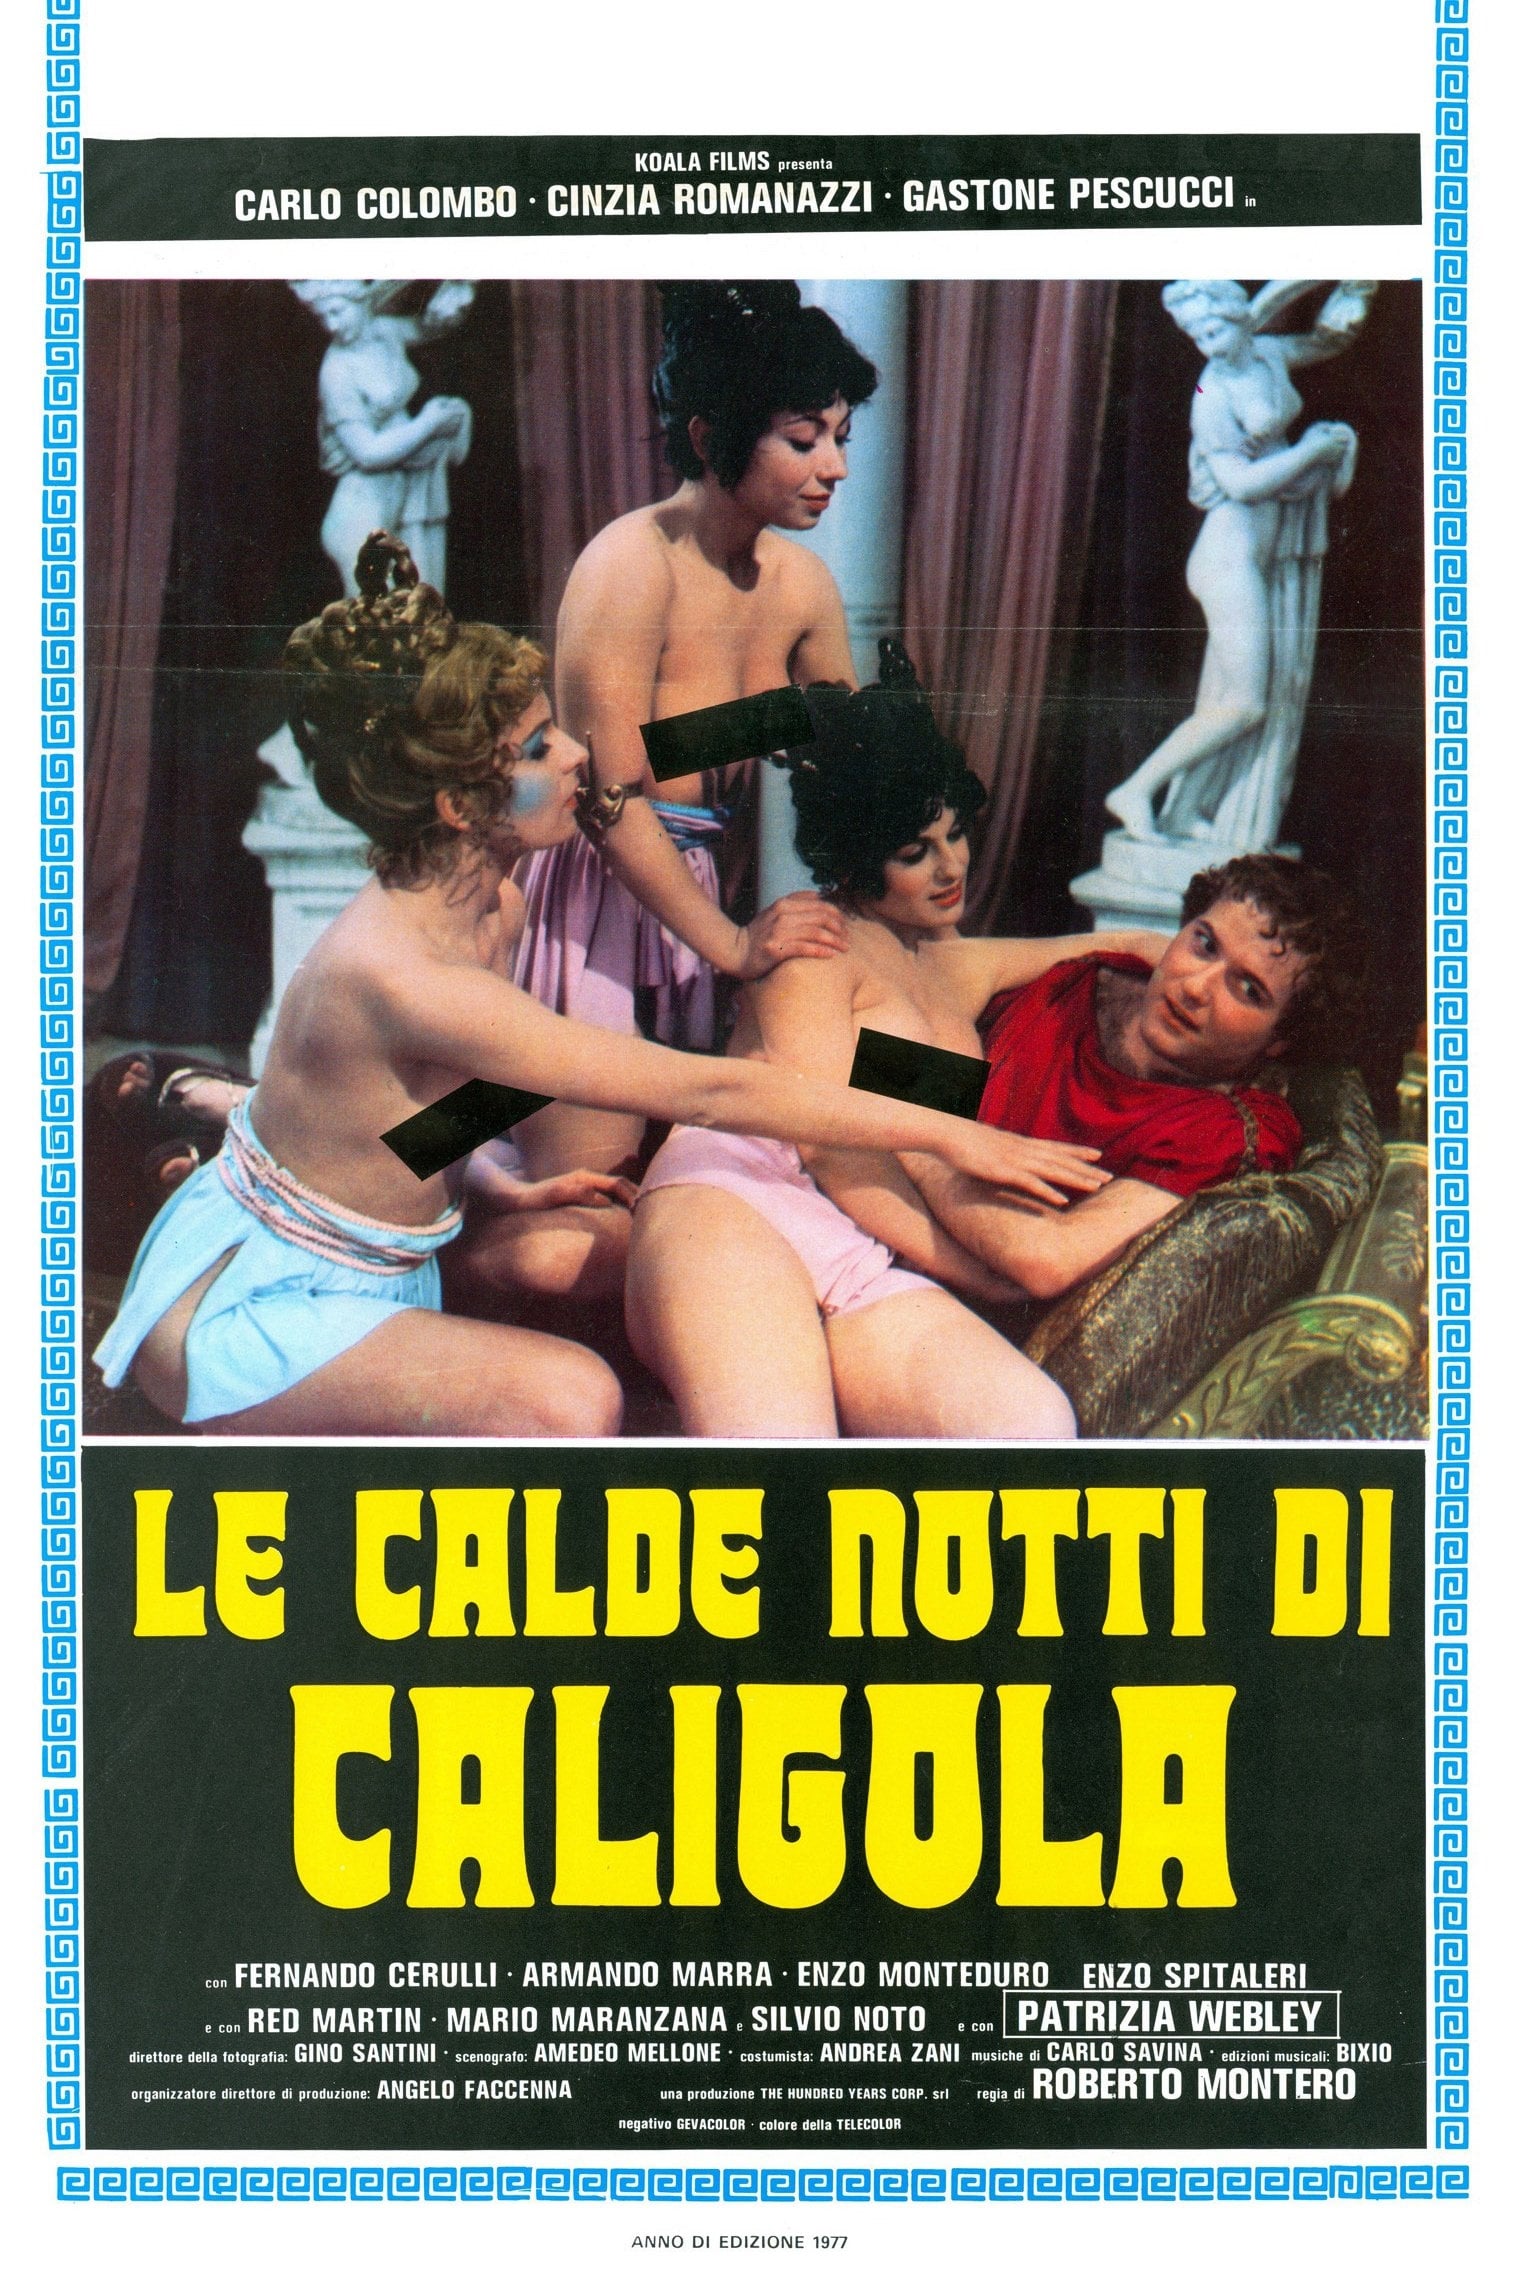 Le calde notti di Caligola film